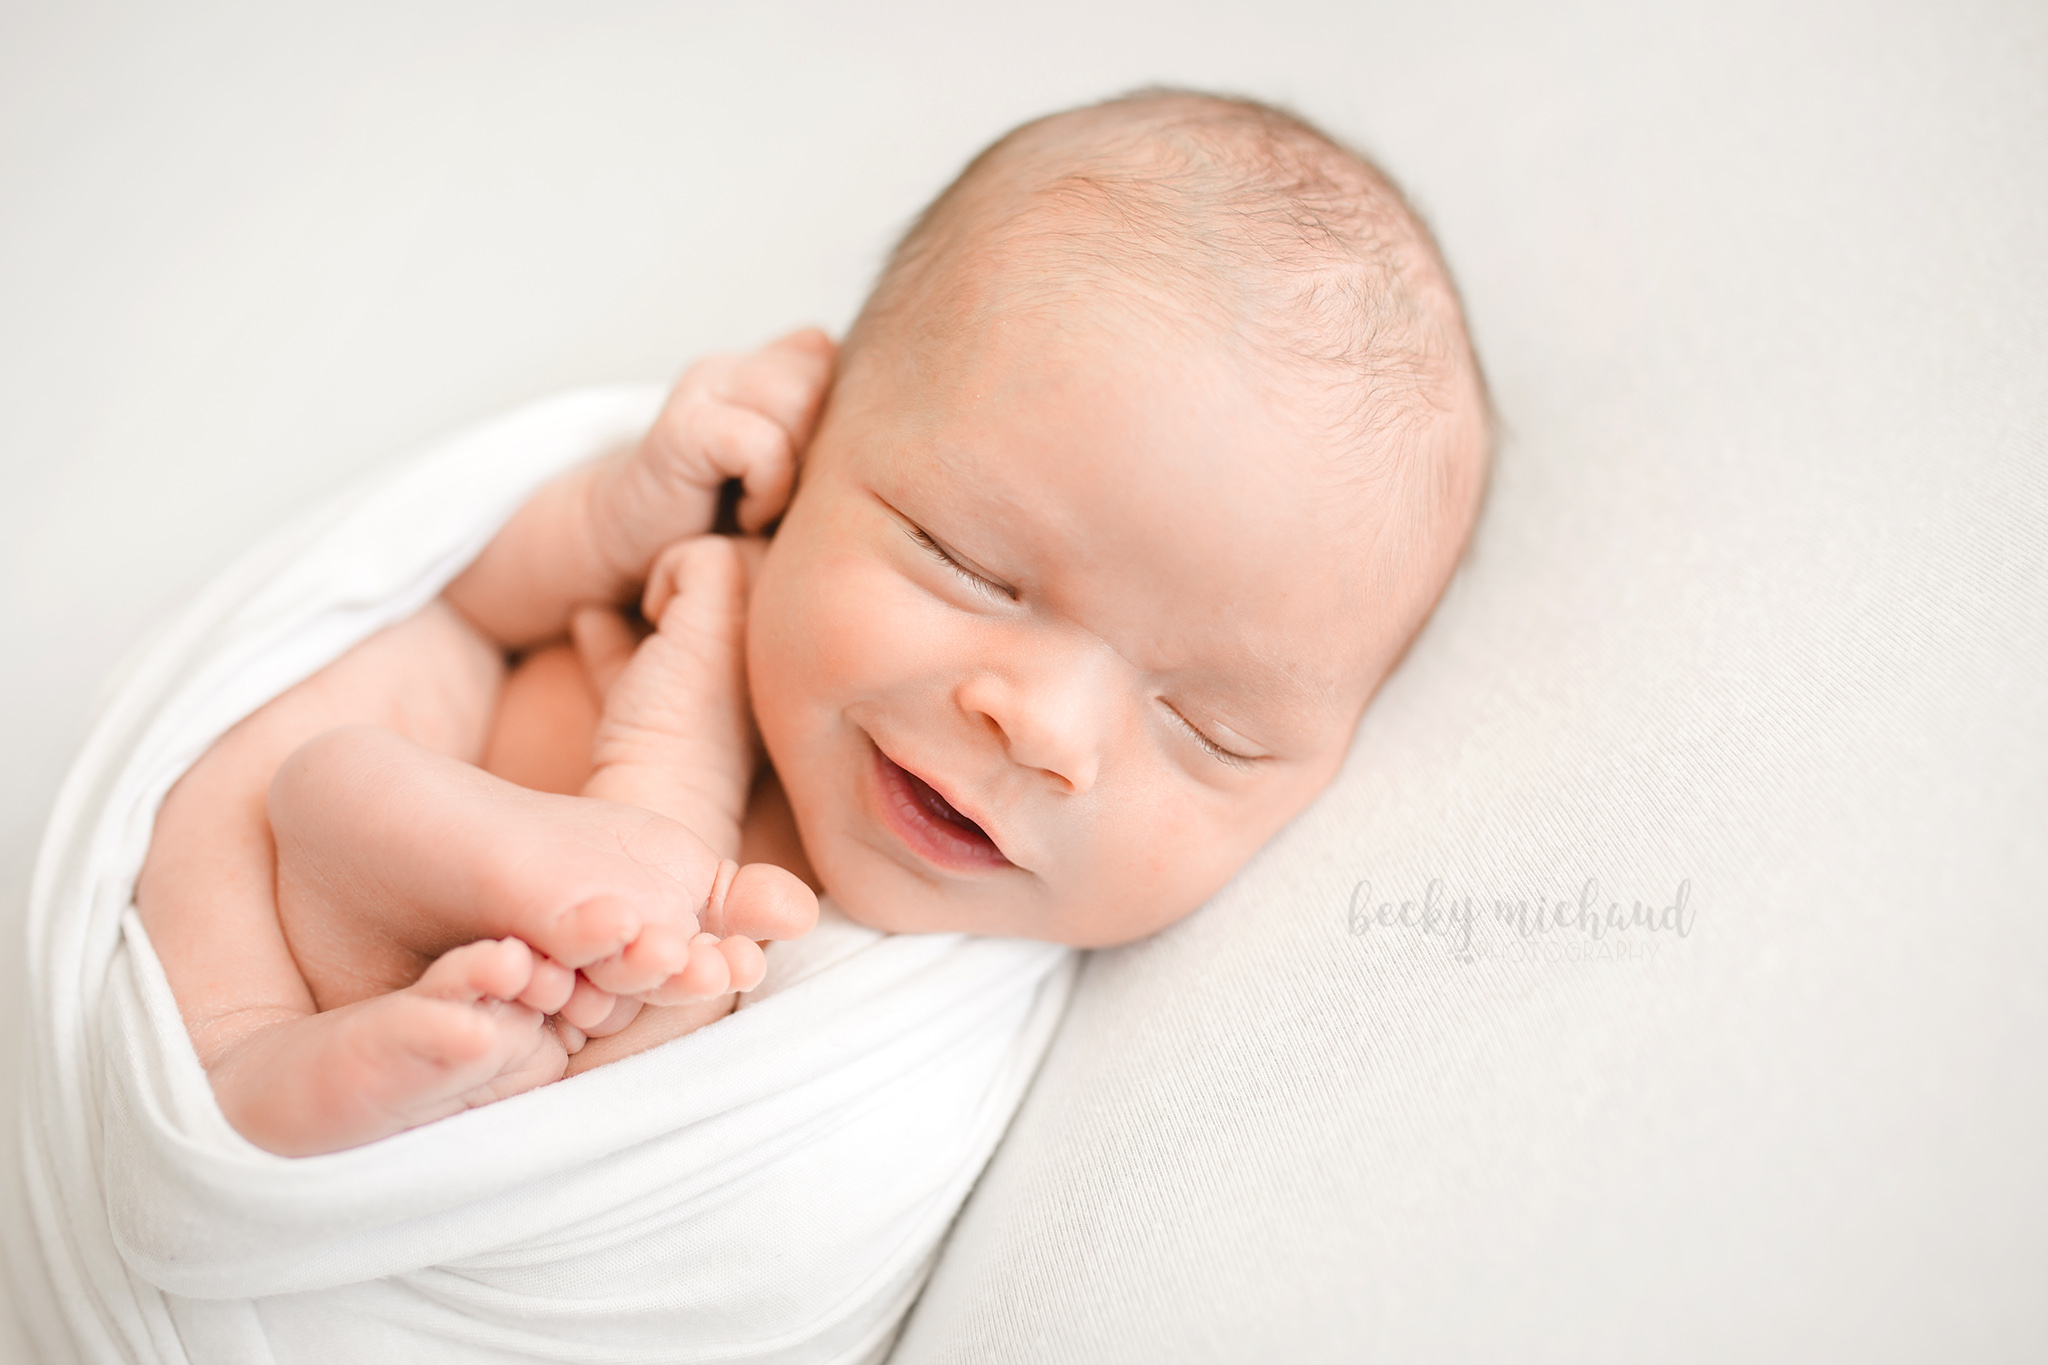 Simple organic newborn portrait of a baby boy smiling